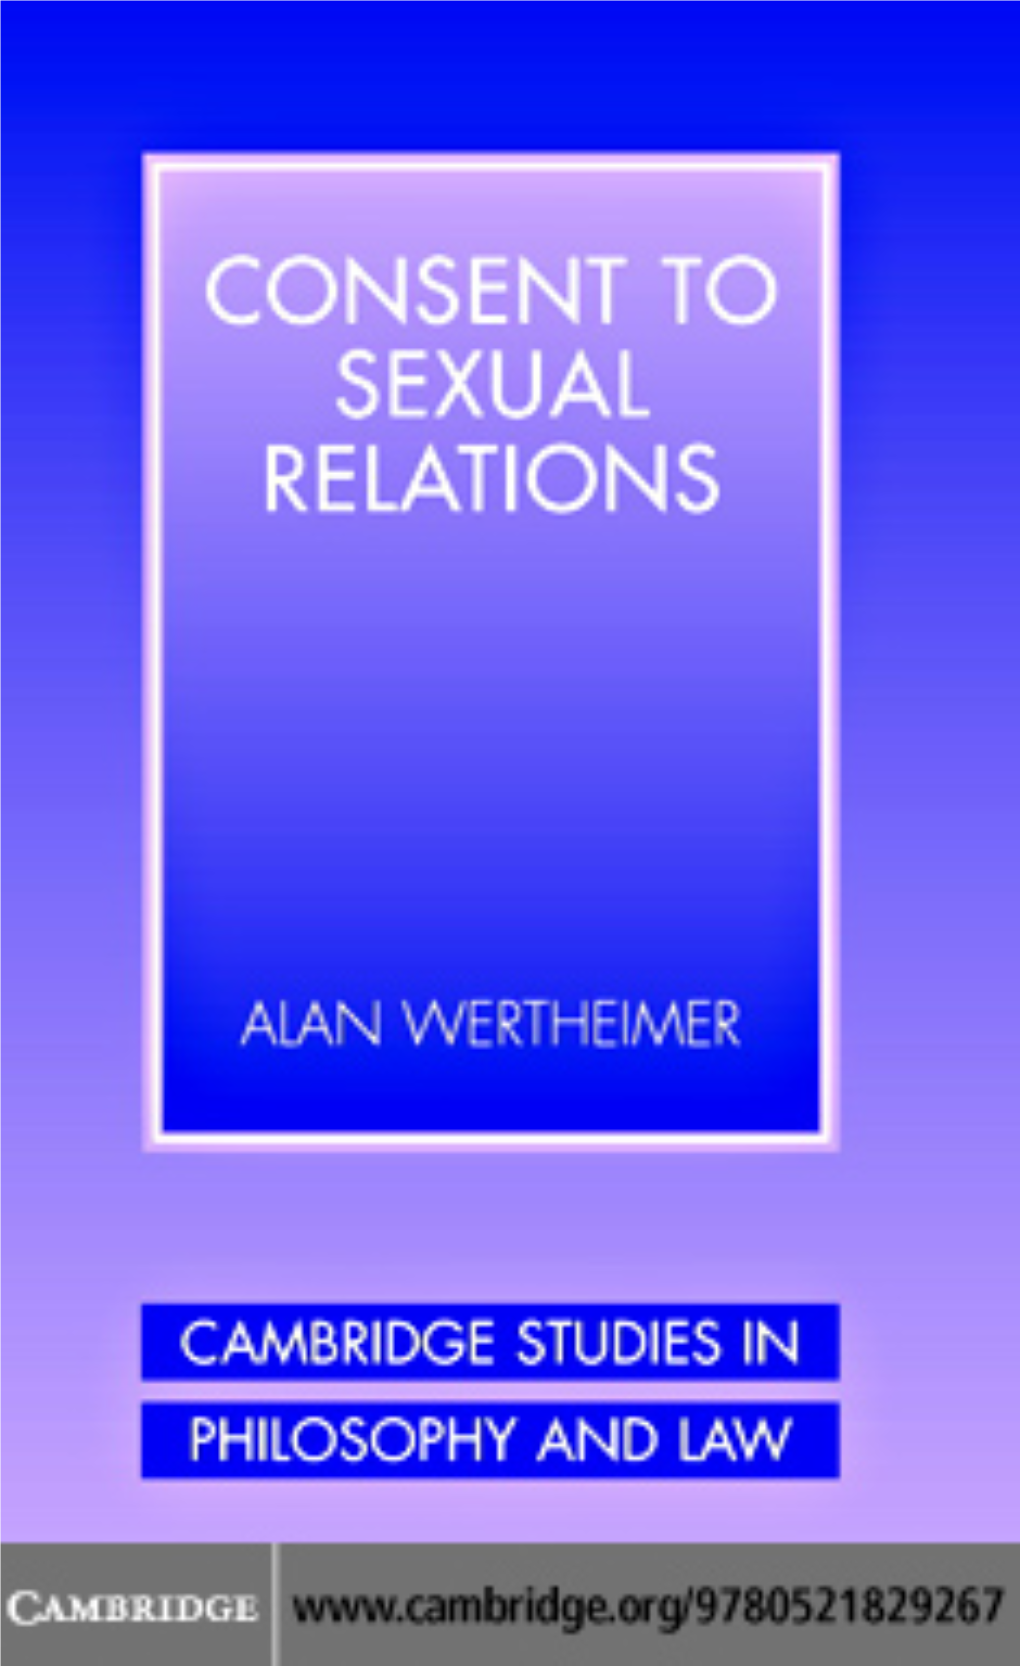 Consent to Sexual Relations (2003, Cambridge University Press